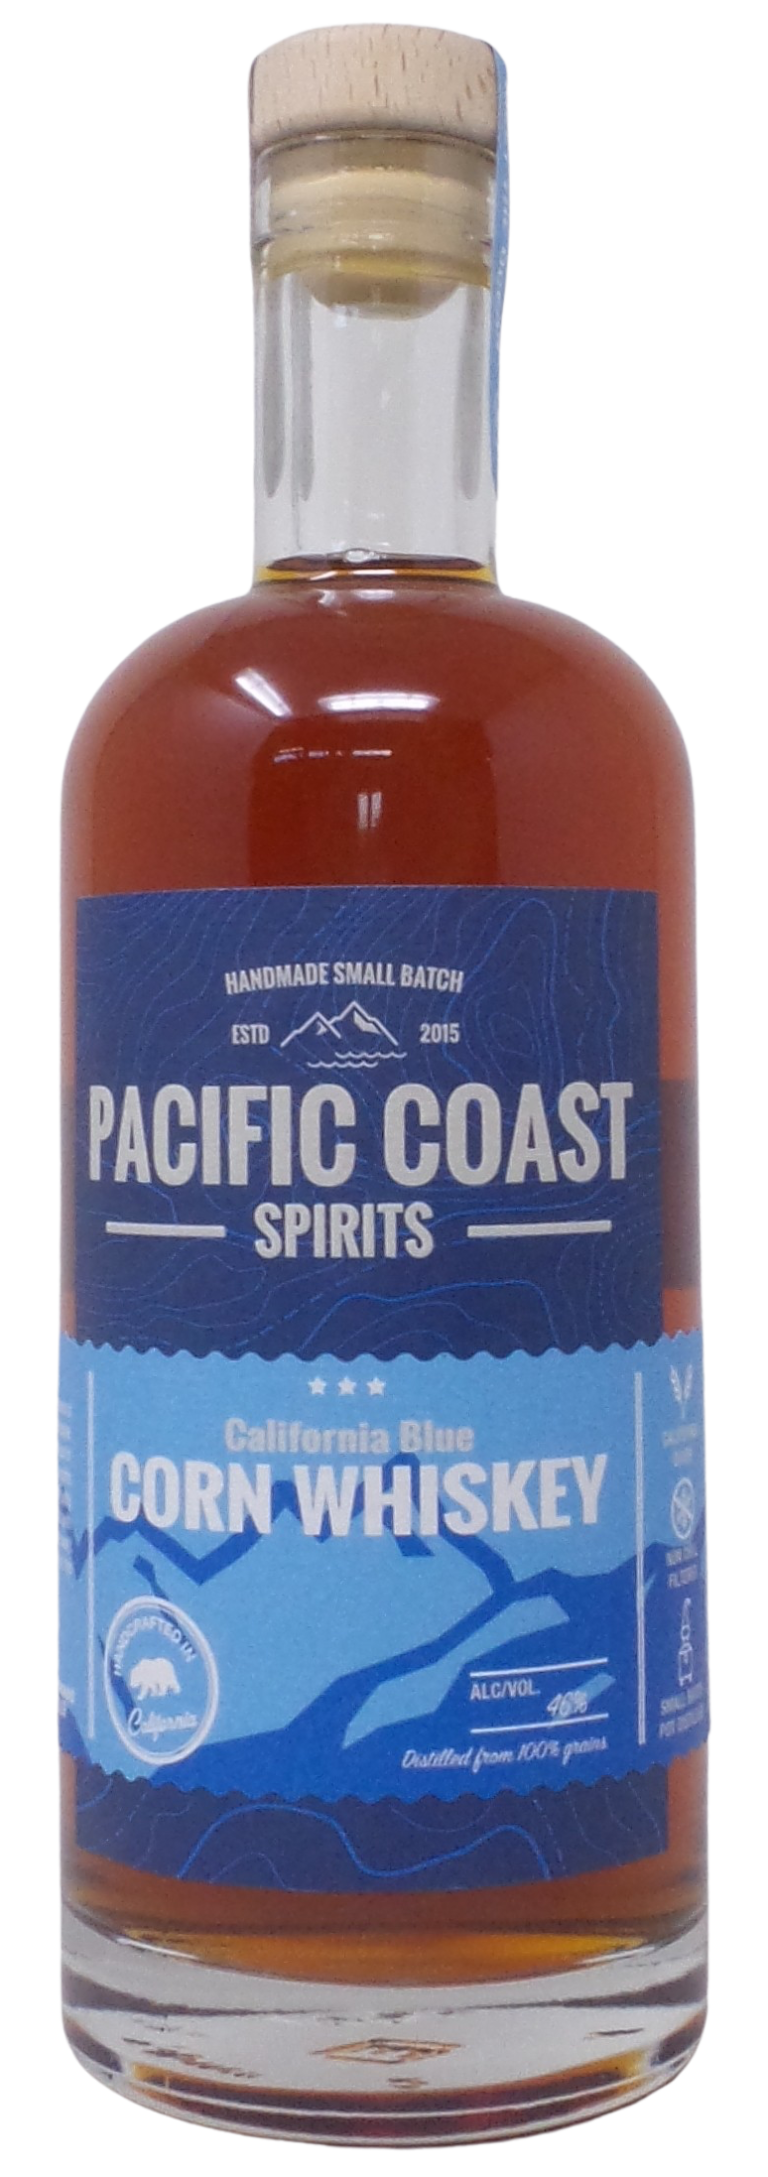 Pacific Coast Spirits California Blue Corn Whiskey